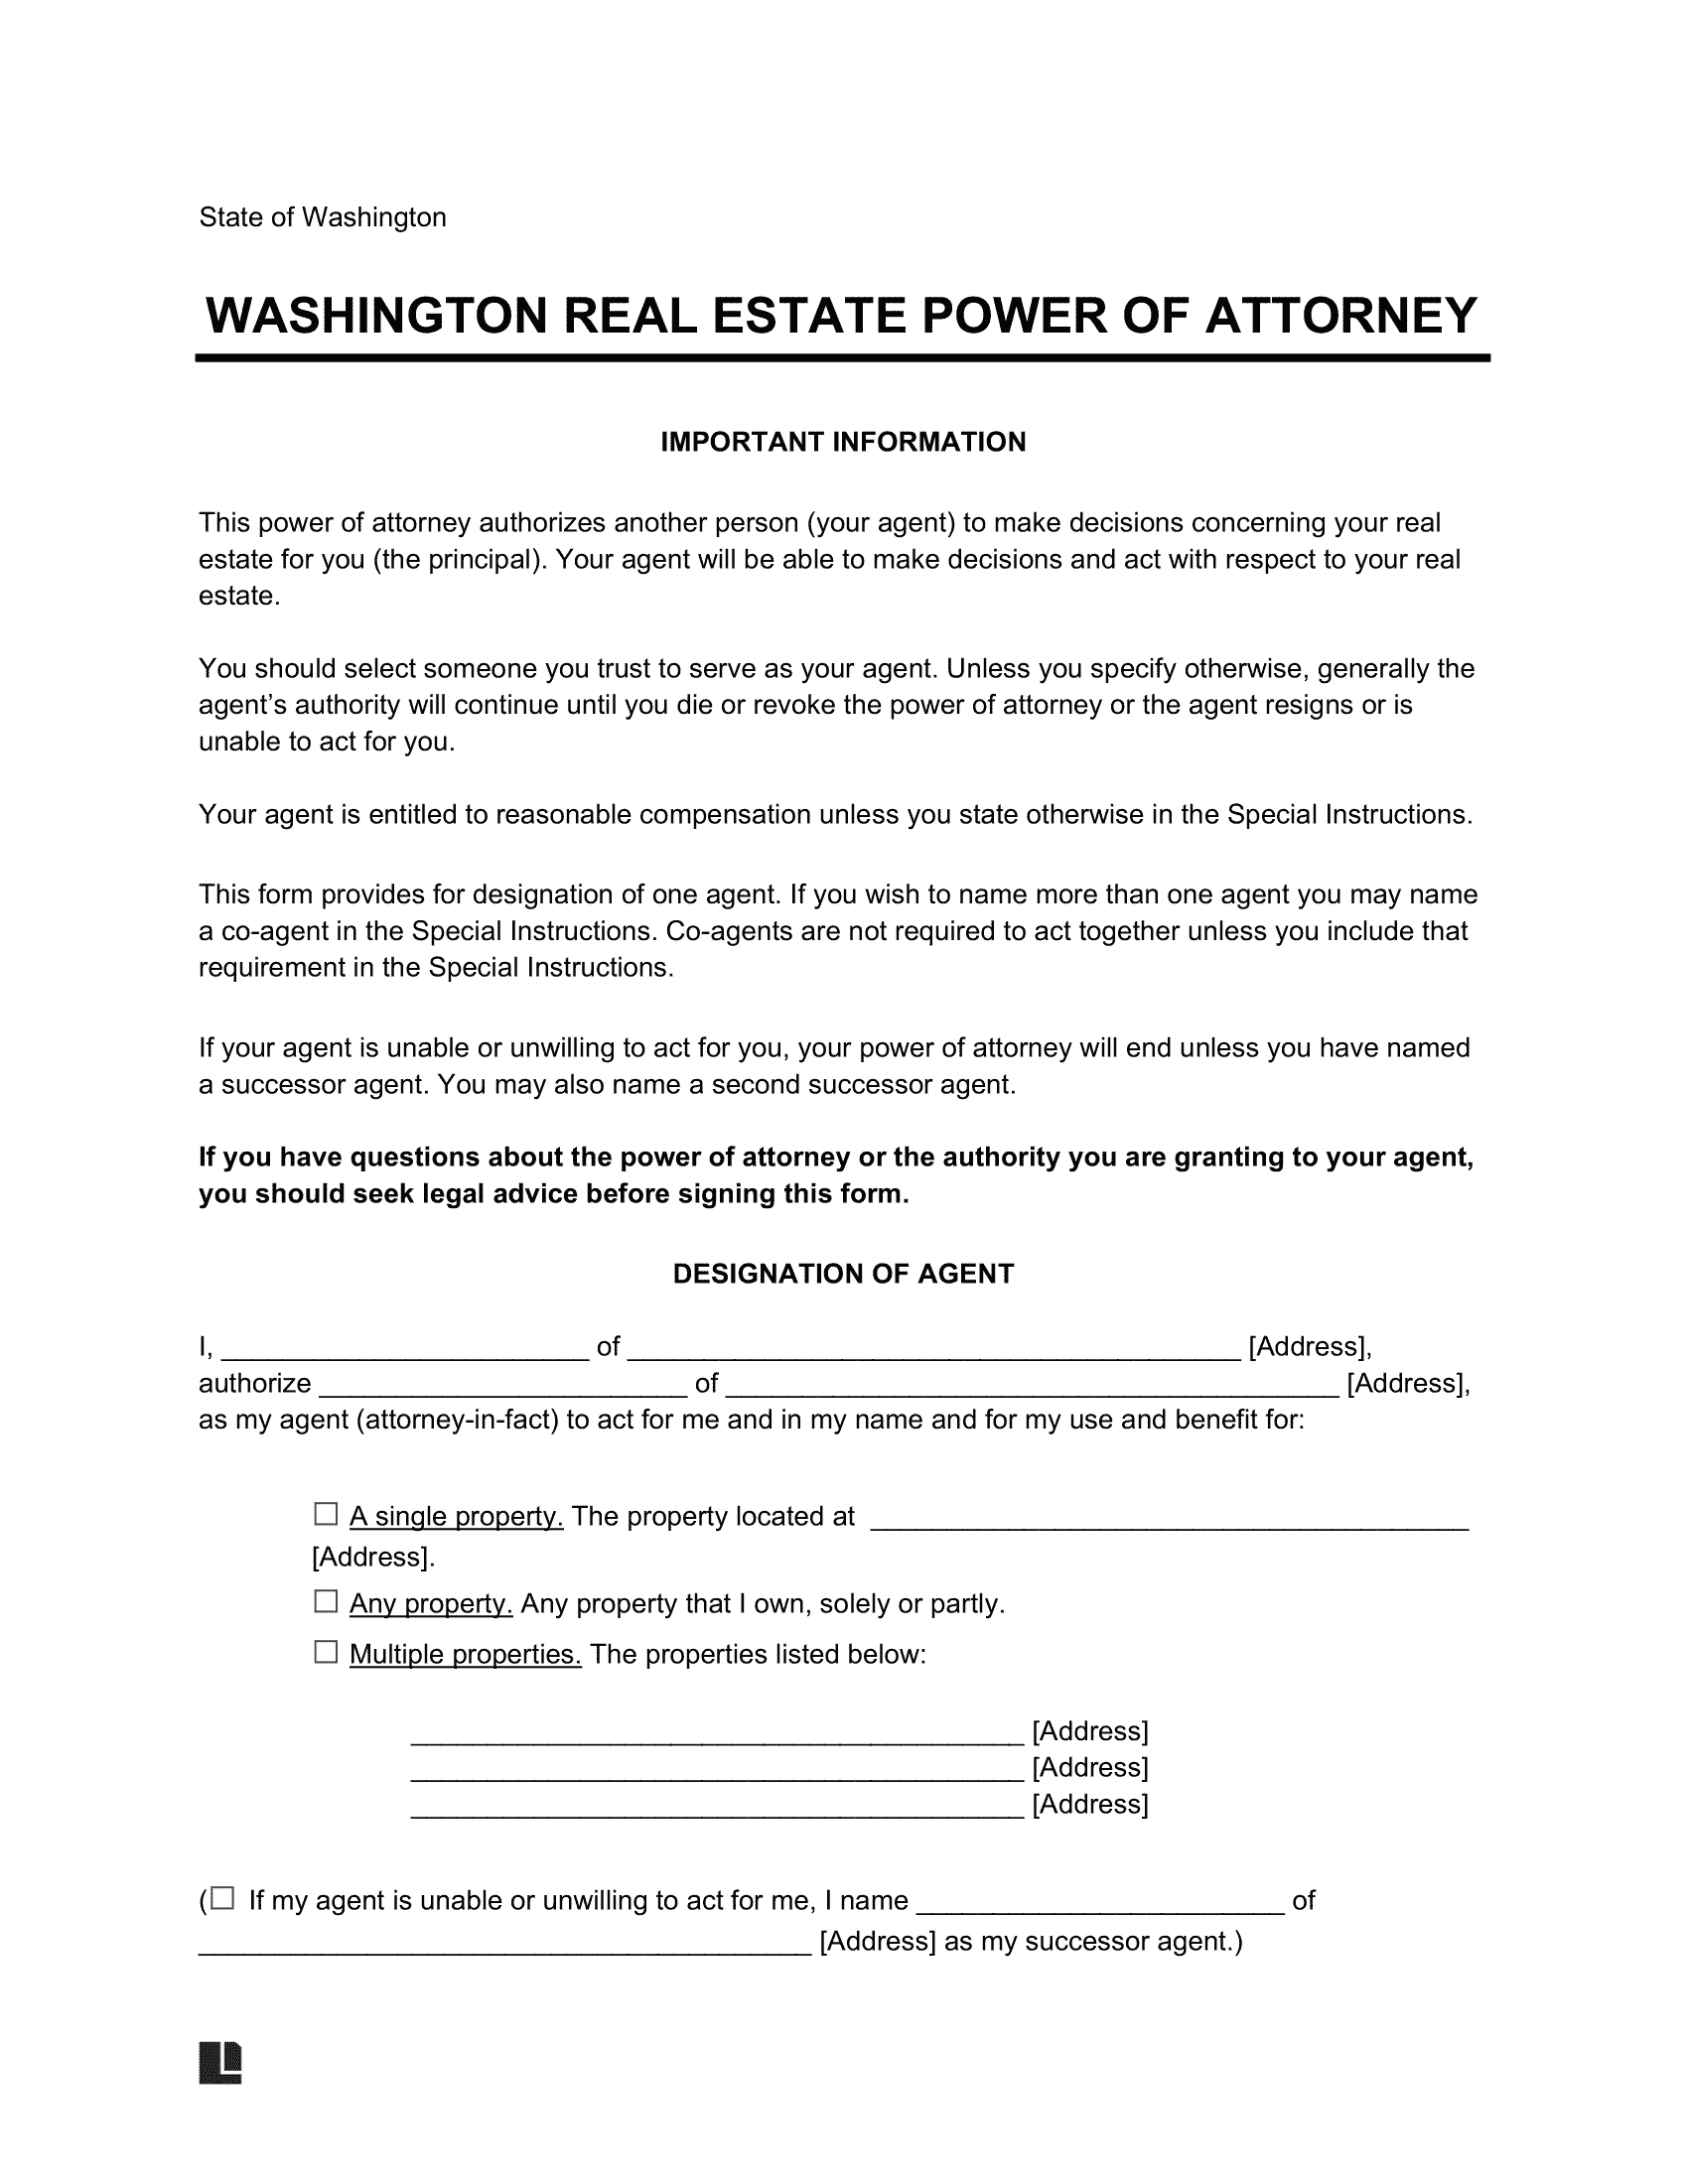 Washington Real Estate Power of Attorney Form